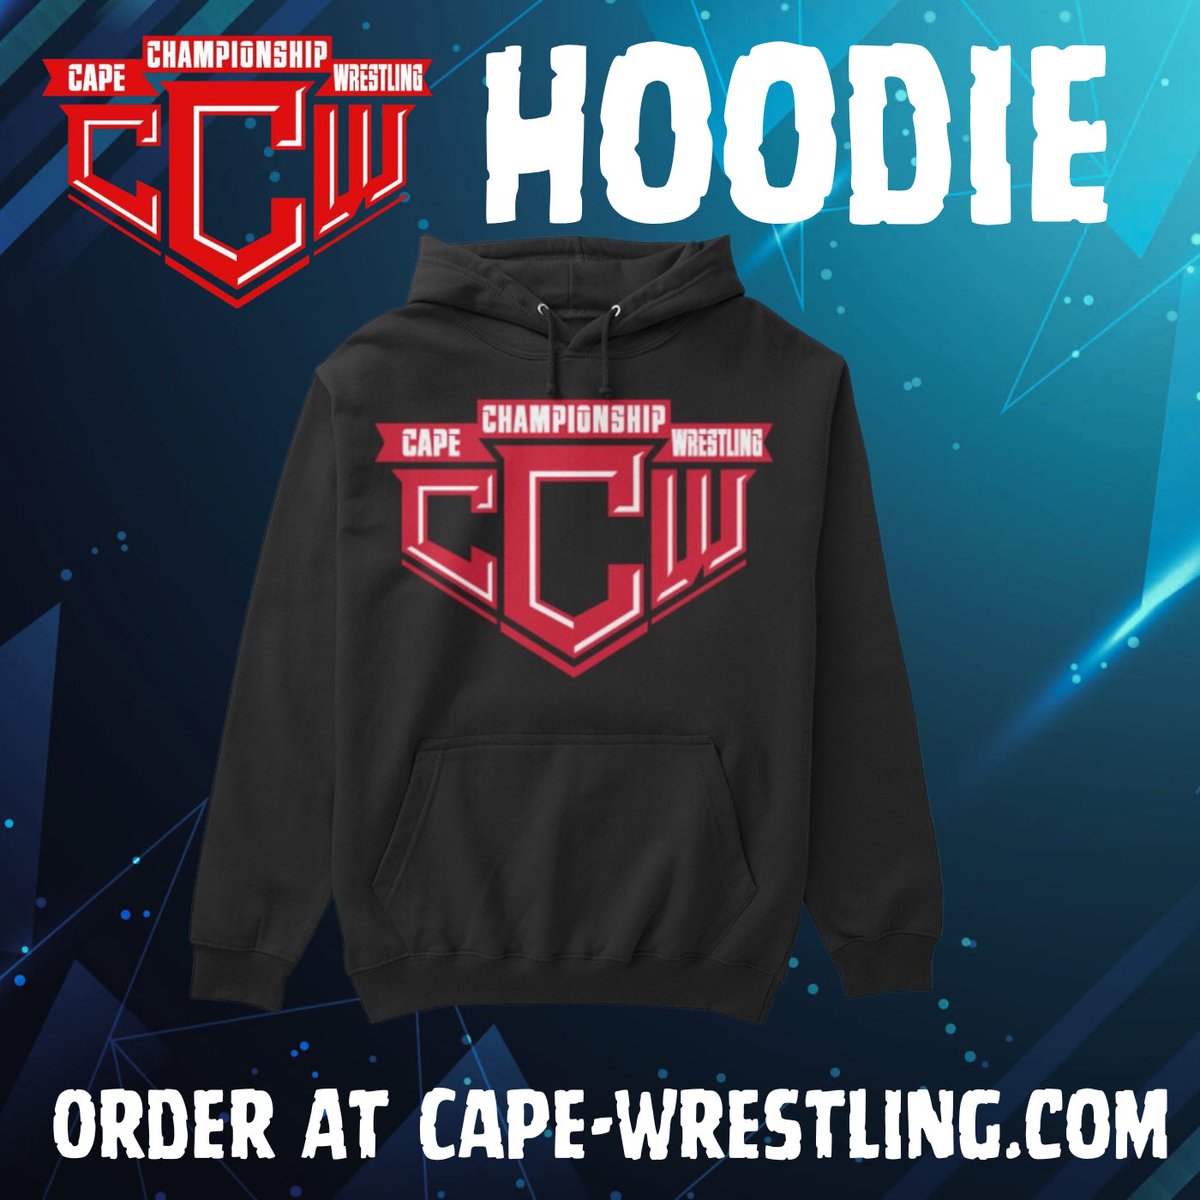 #HoodieSeason is near! Order your CCW Hoodie at Cape-Wrestling.com